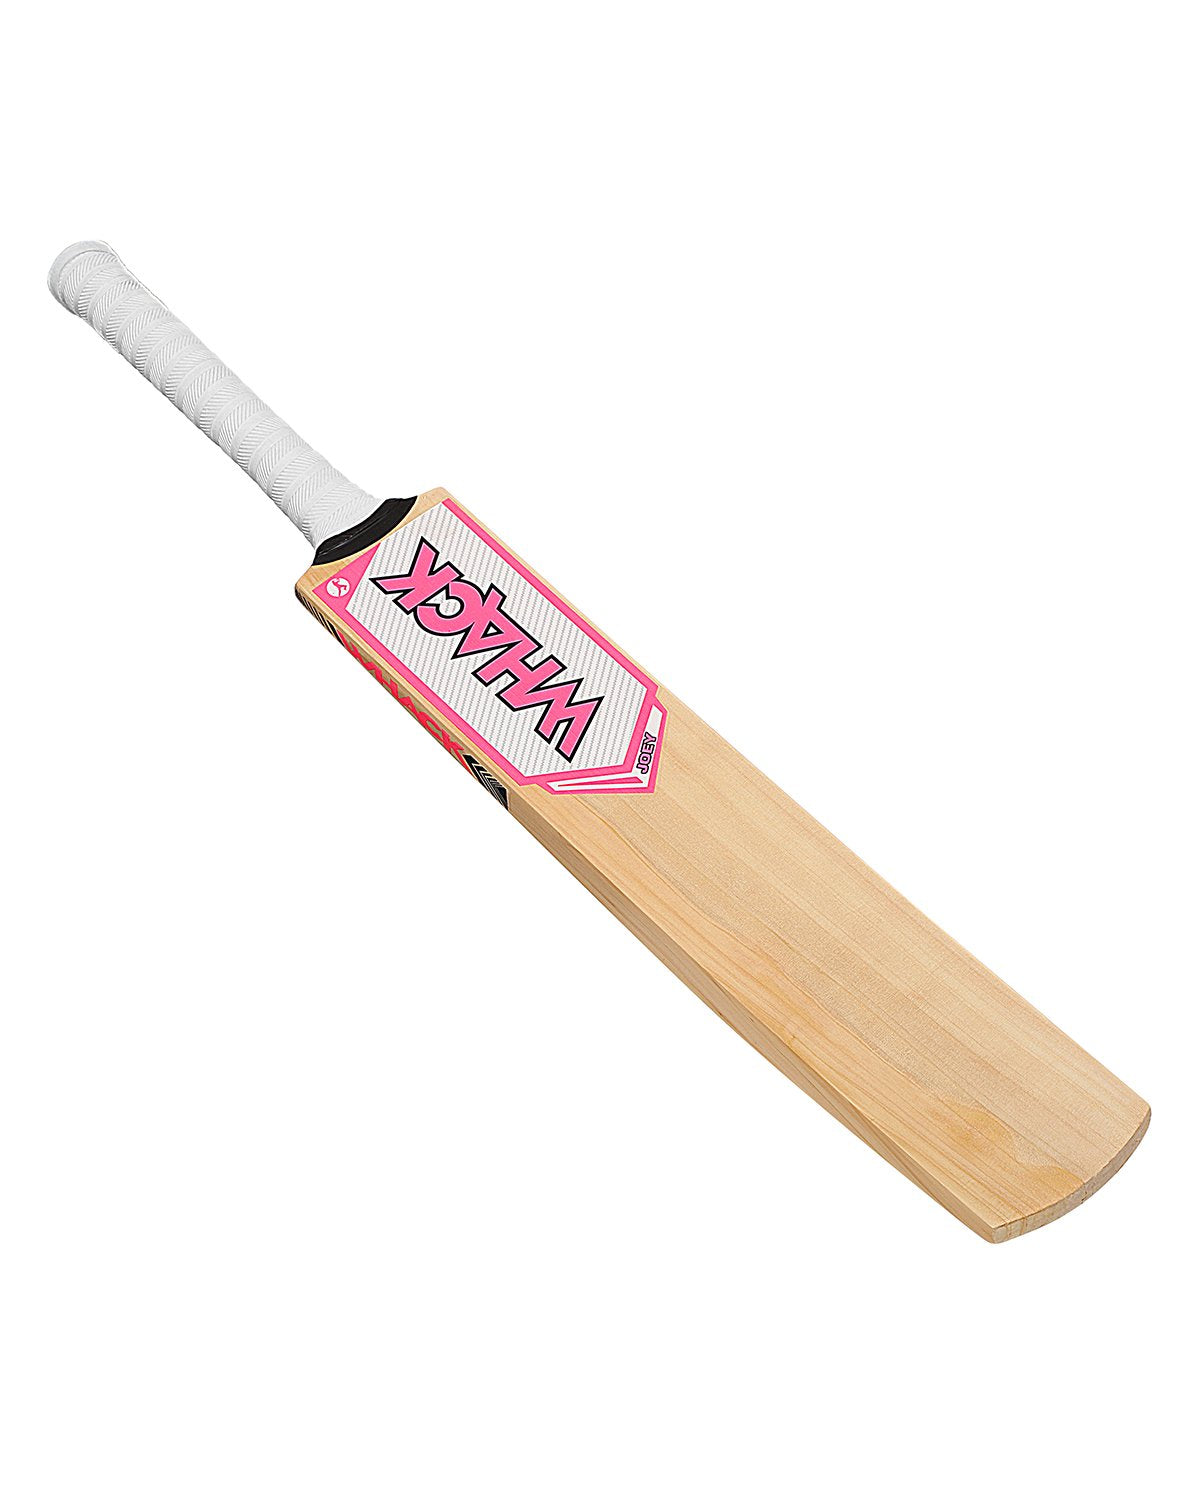 WHACK Joey PINK Kashmir Willow Cricket Bat - Boys/Junior